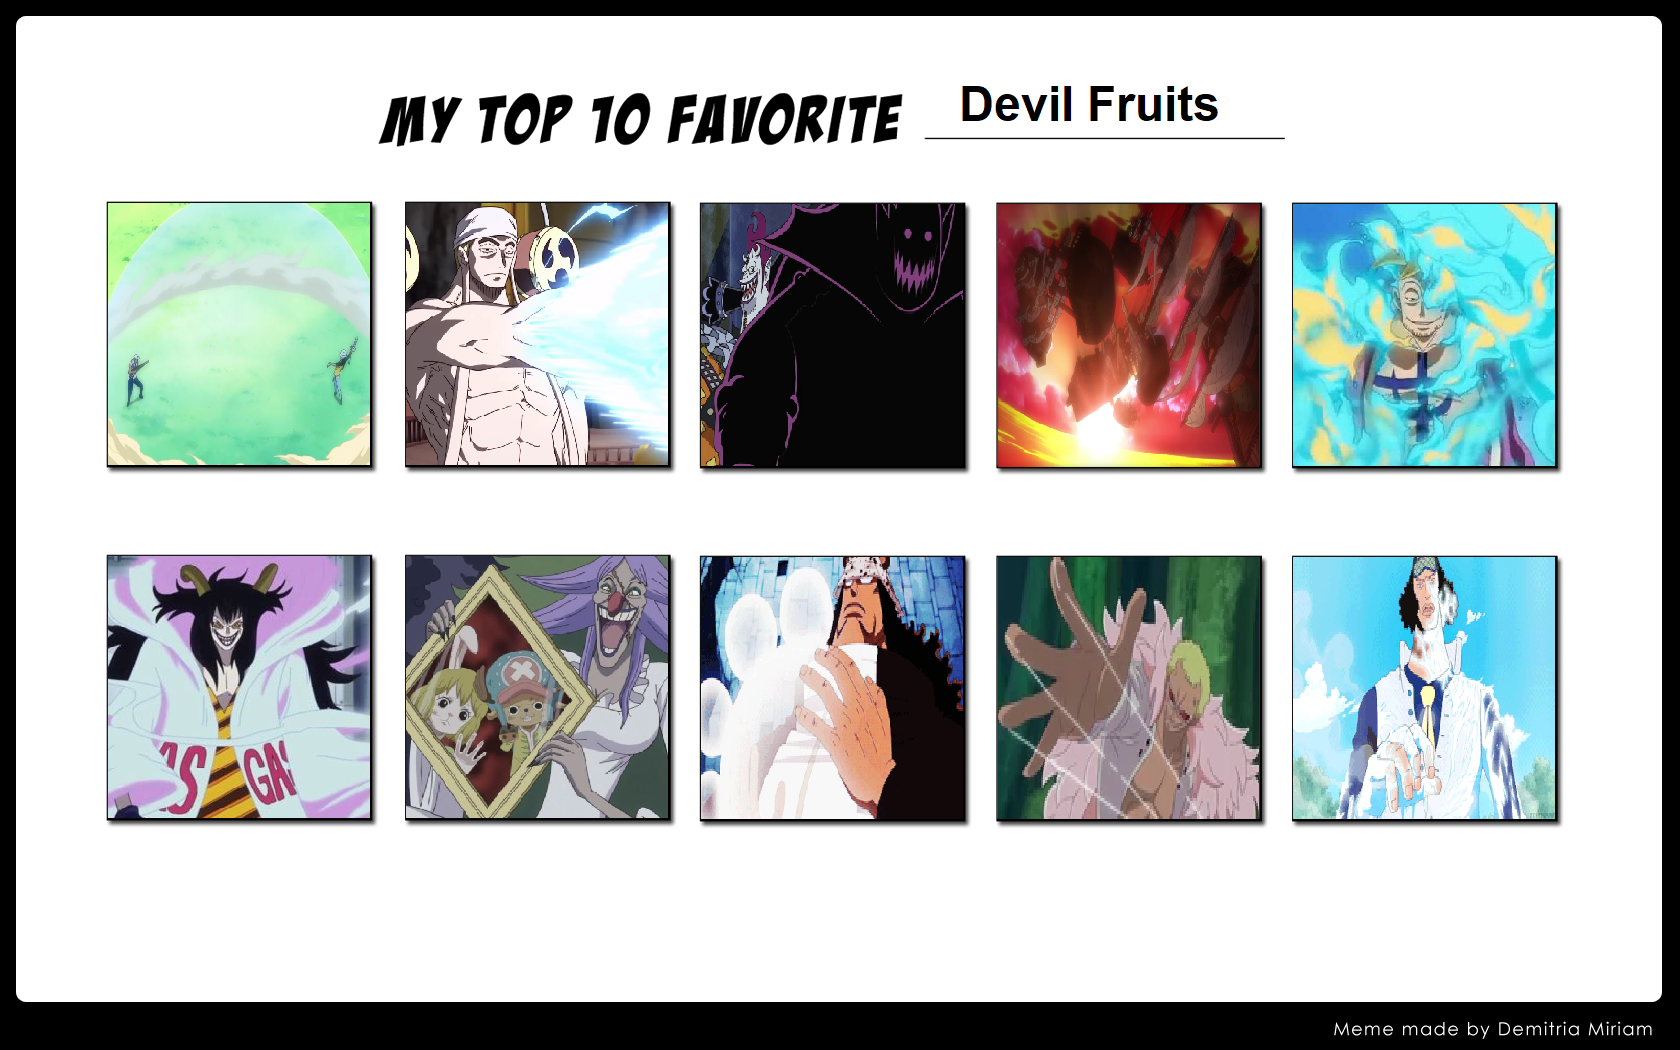 My top 10 favorite Devil Fruits